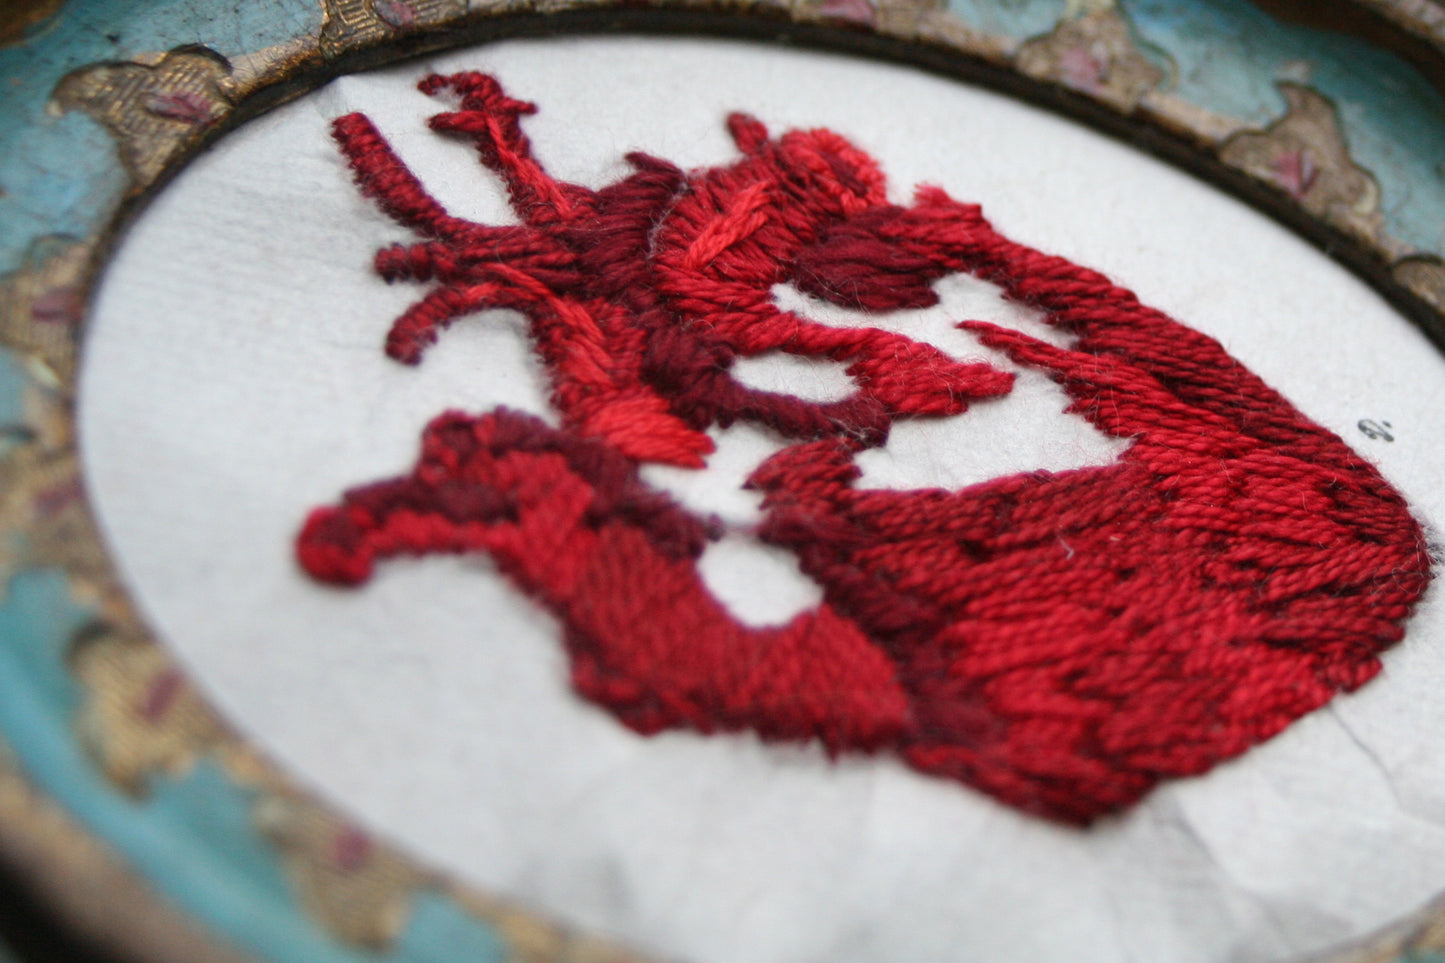 Embroidery Heart 10,4 metri d'amore - Drunkenrabbit